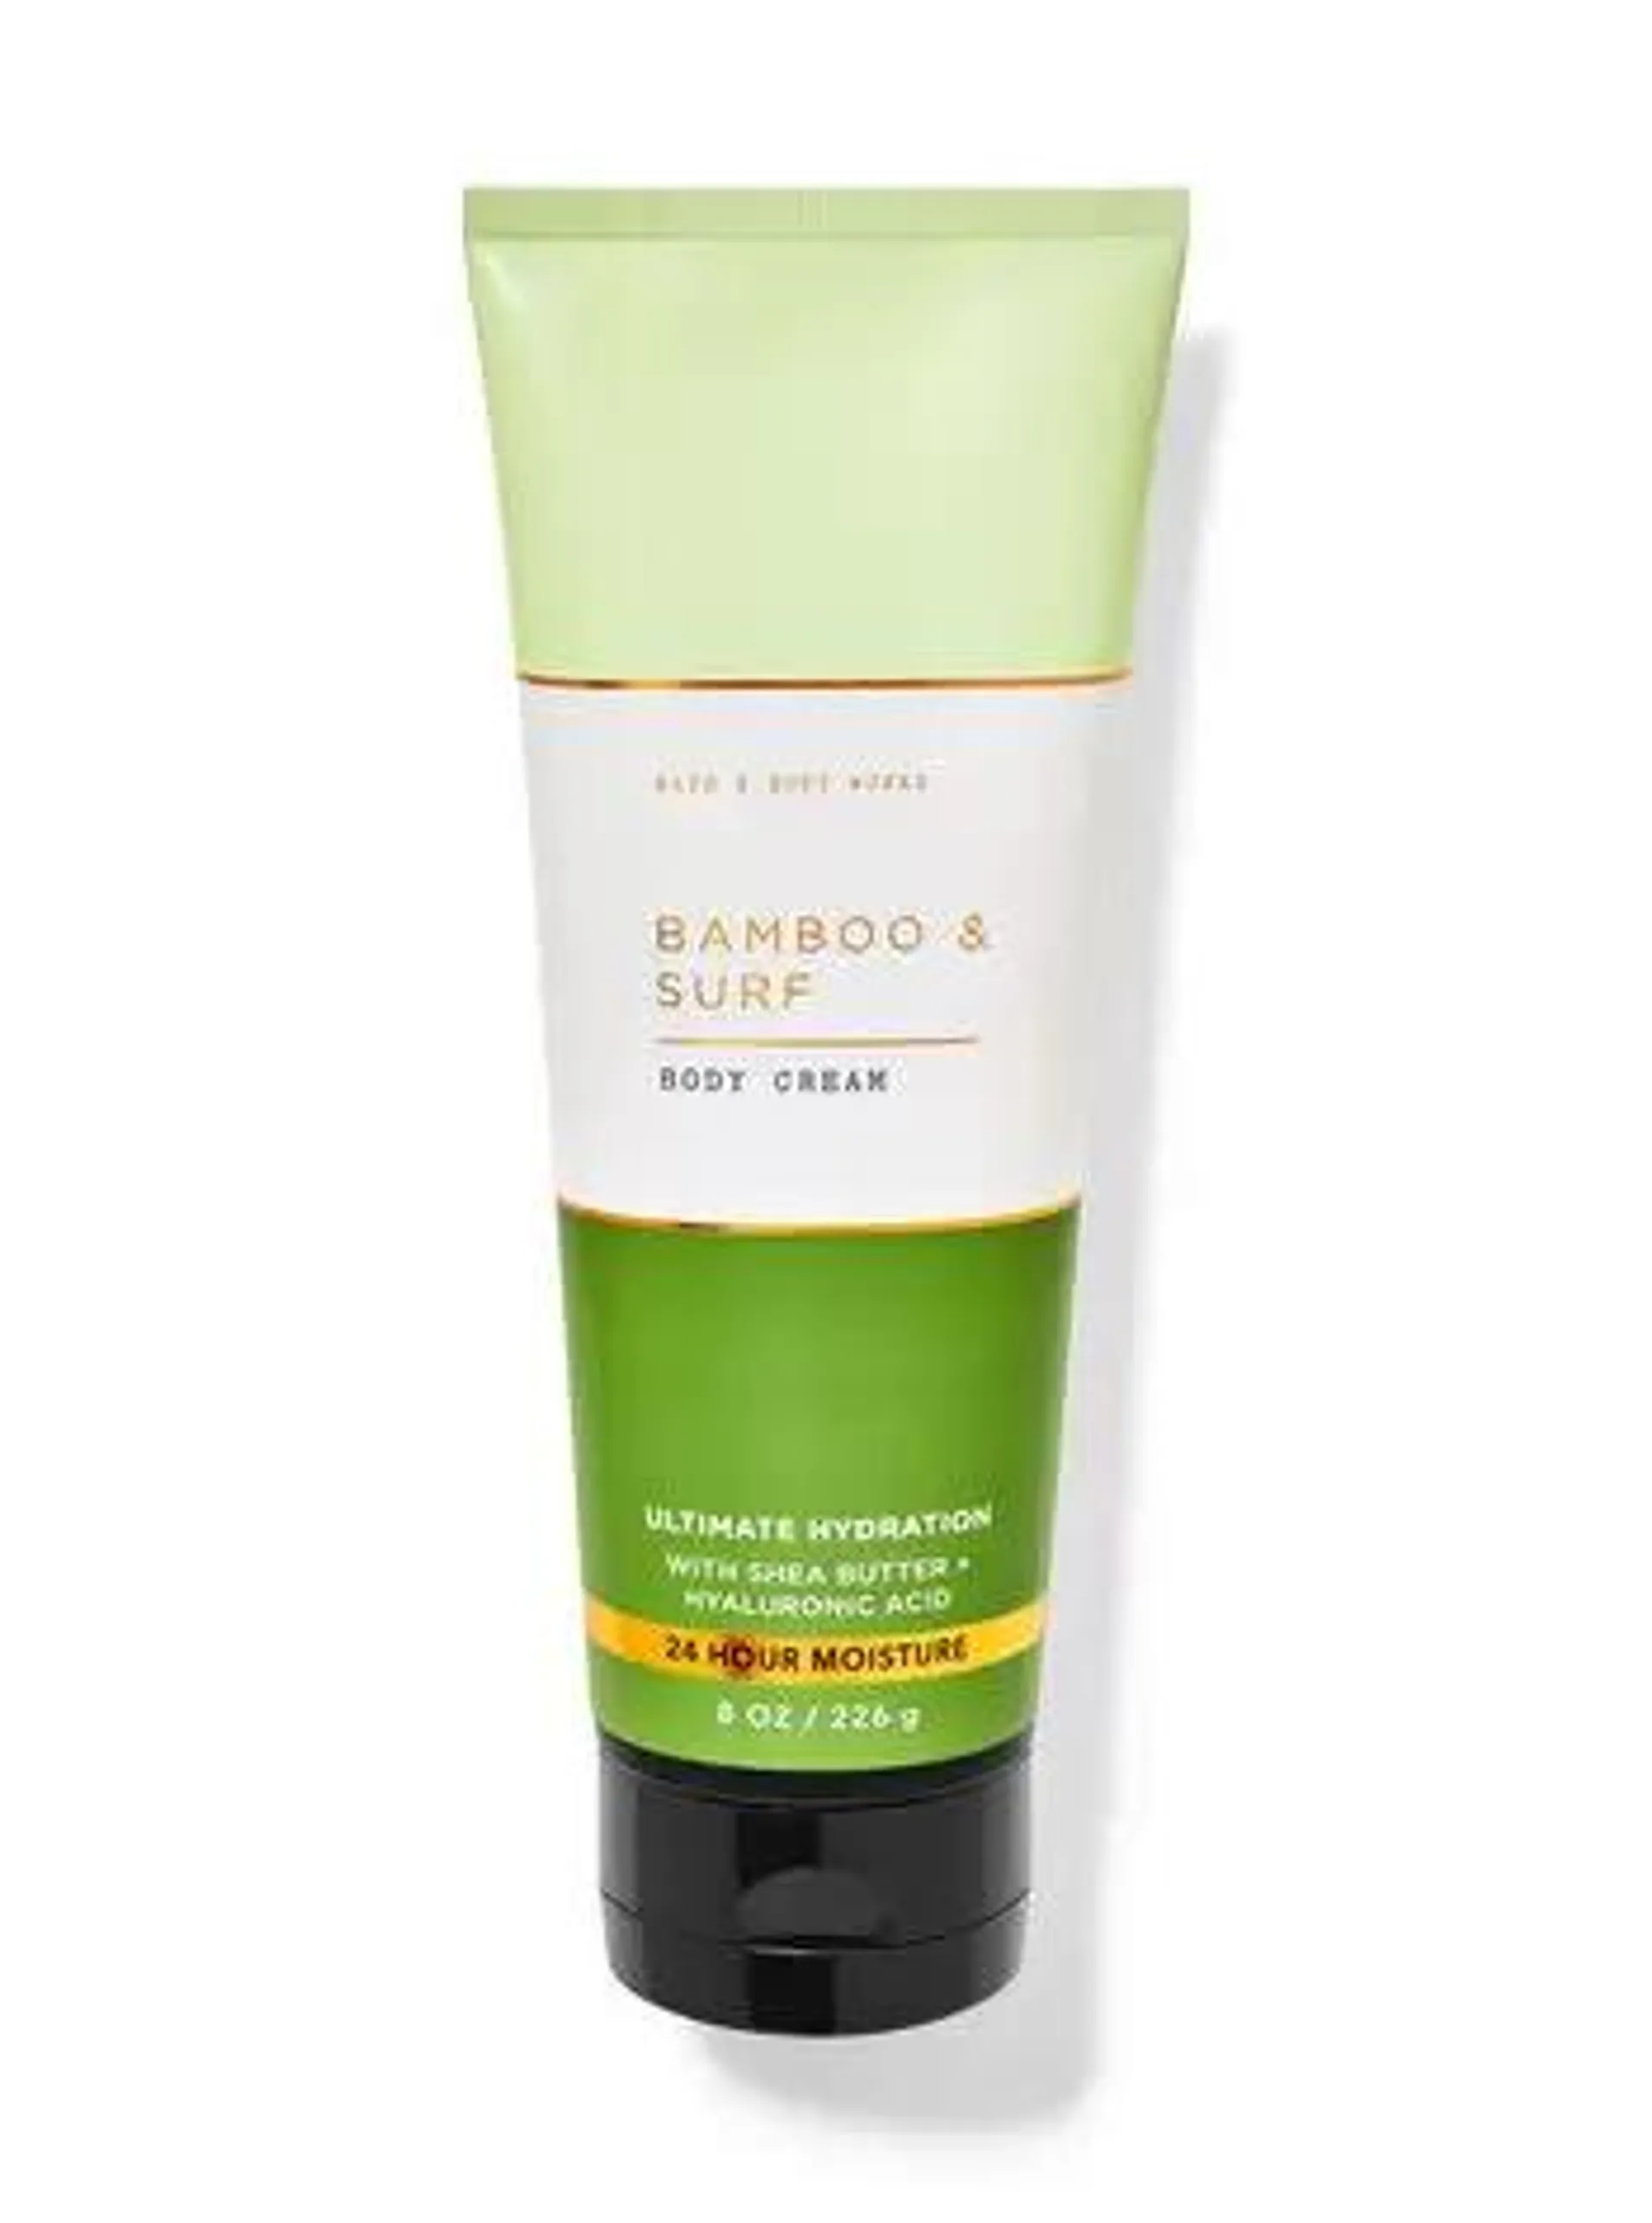 Bamboo & Surf Ultimate Hydration Body Cream